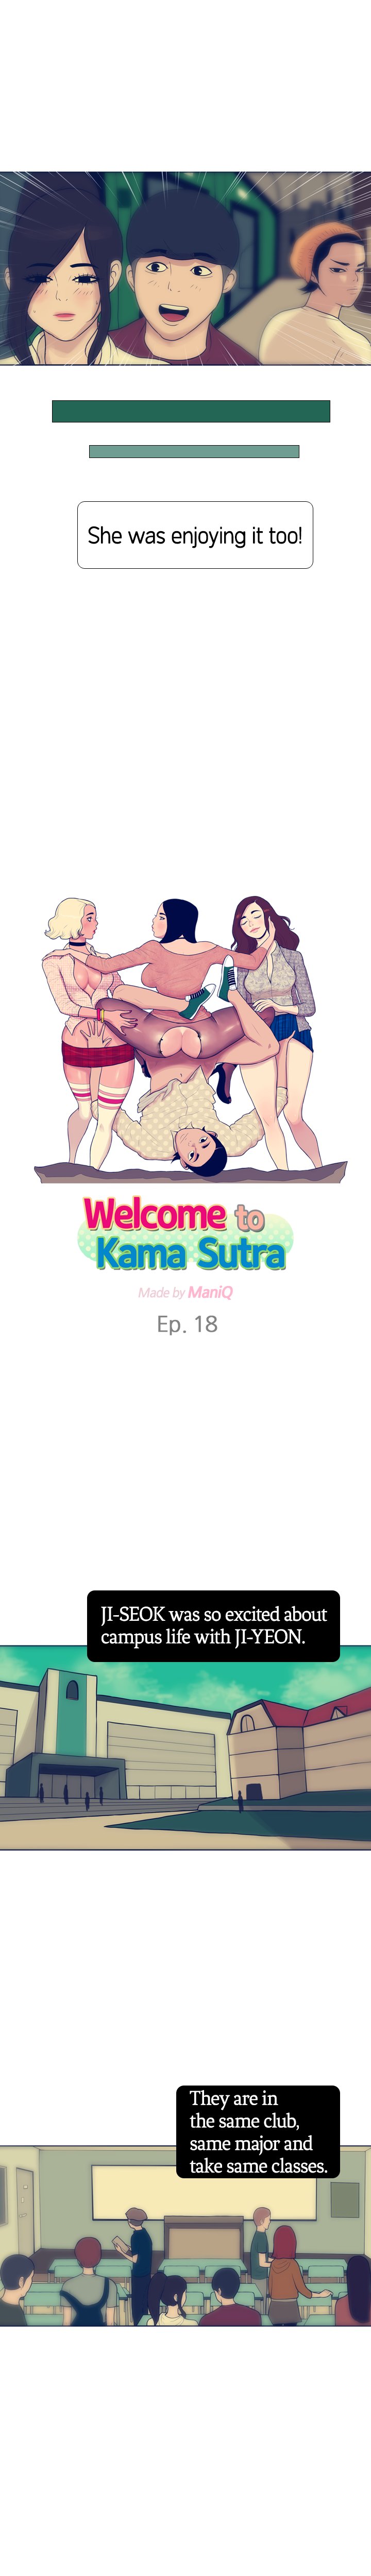 Welcome to Kama Sutra image